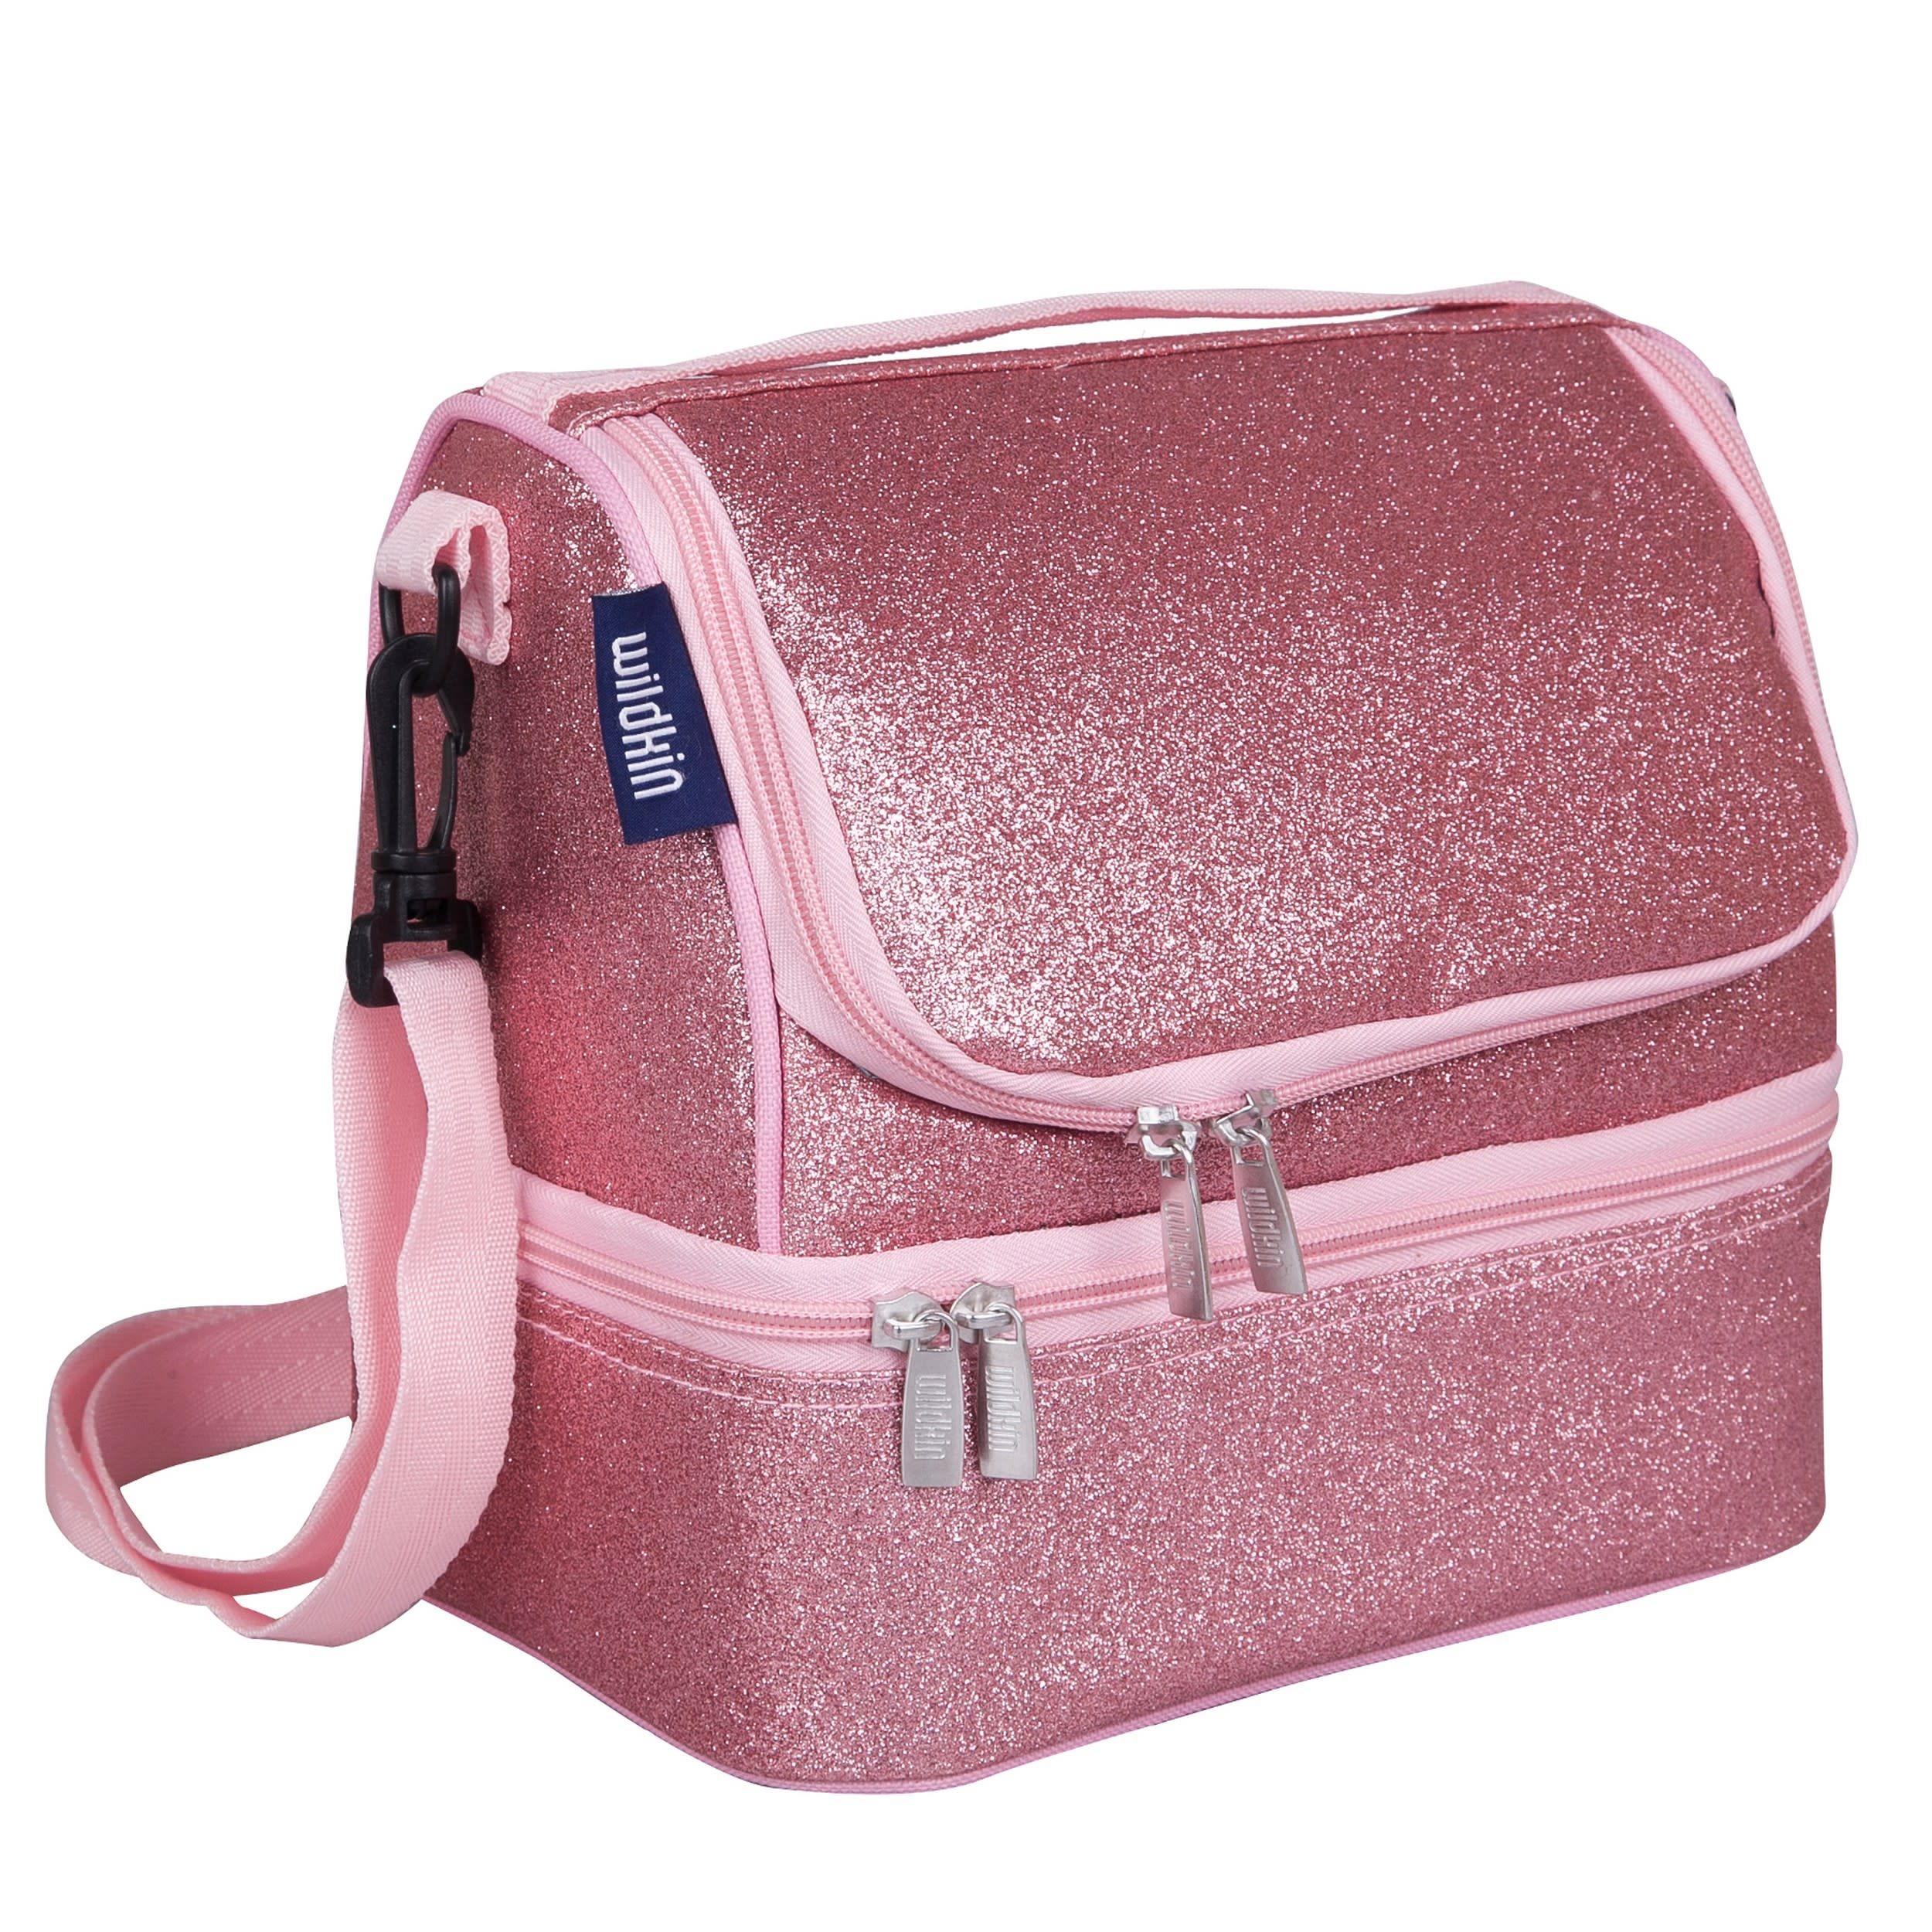 Tirupati Bag Centre PVC Dark Pink Lunch Box Bag (Kit Dark Pink Bag, 19 cm x  9 cm x 27 cm, Dark Pink) : : Garden & Outdoors